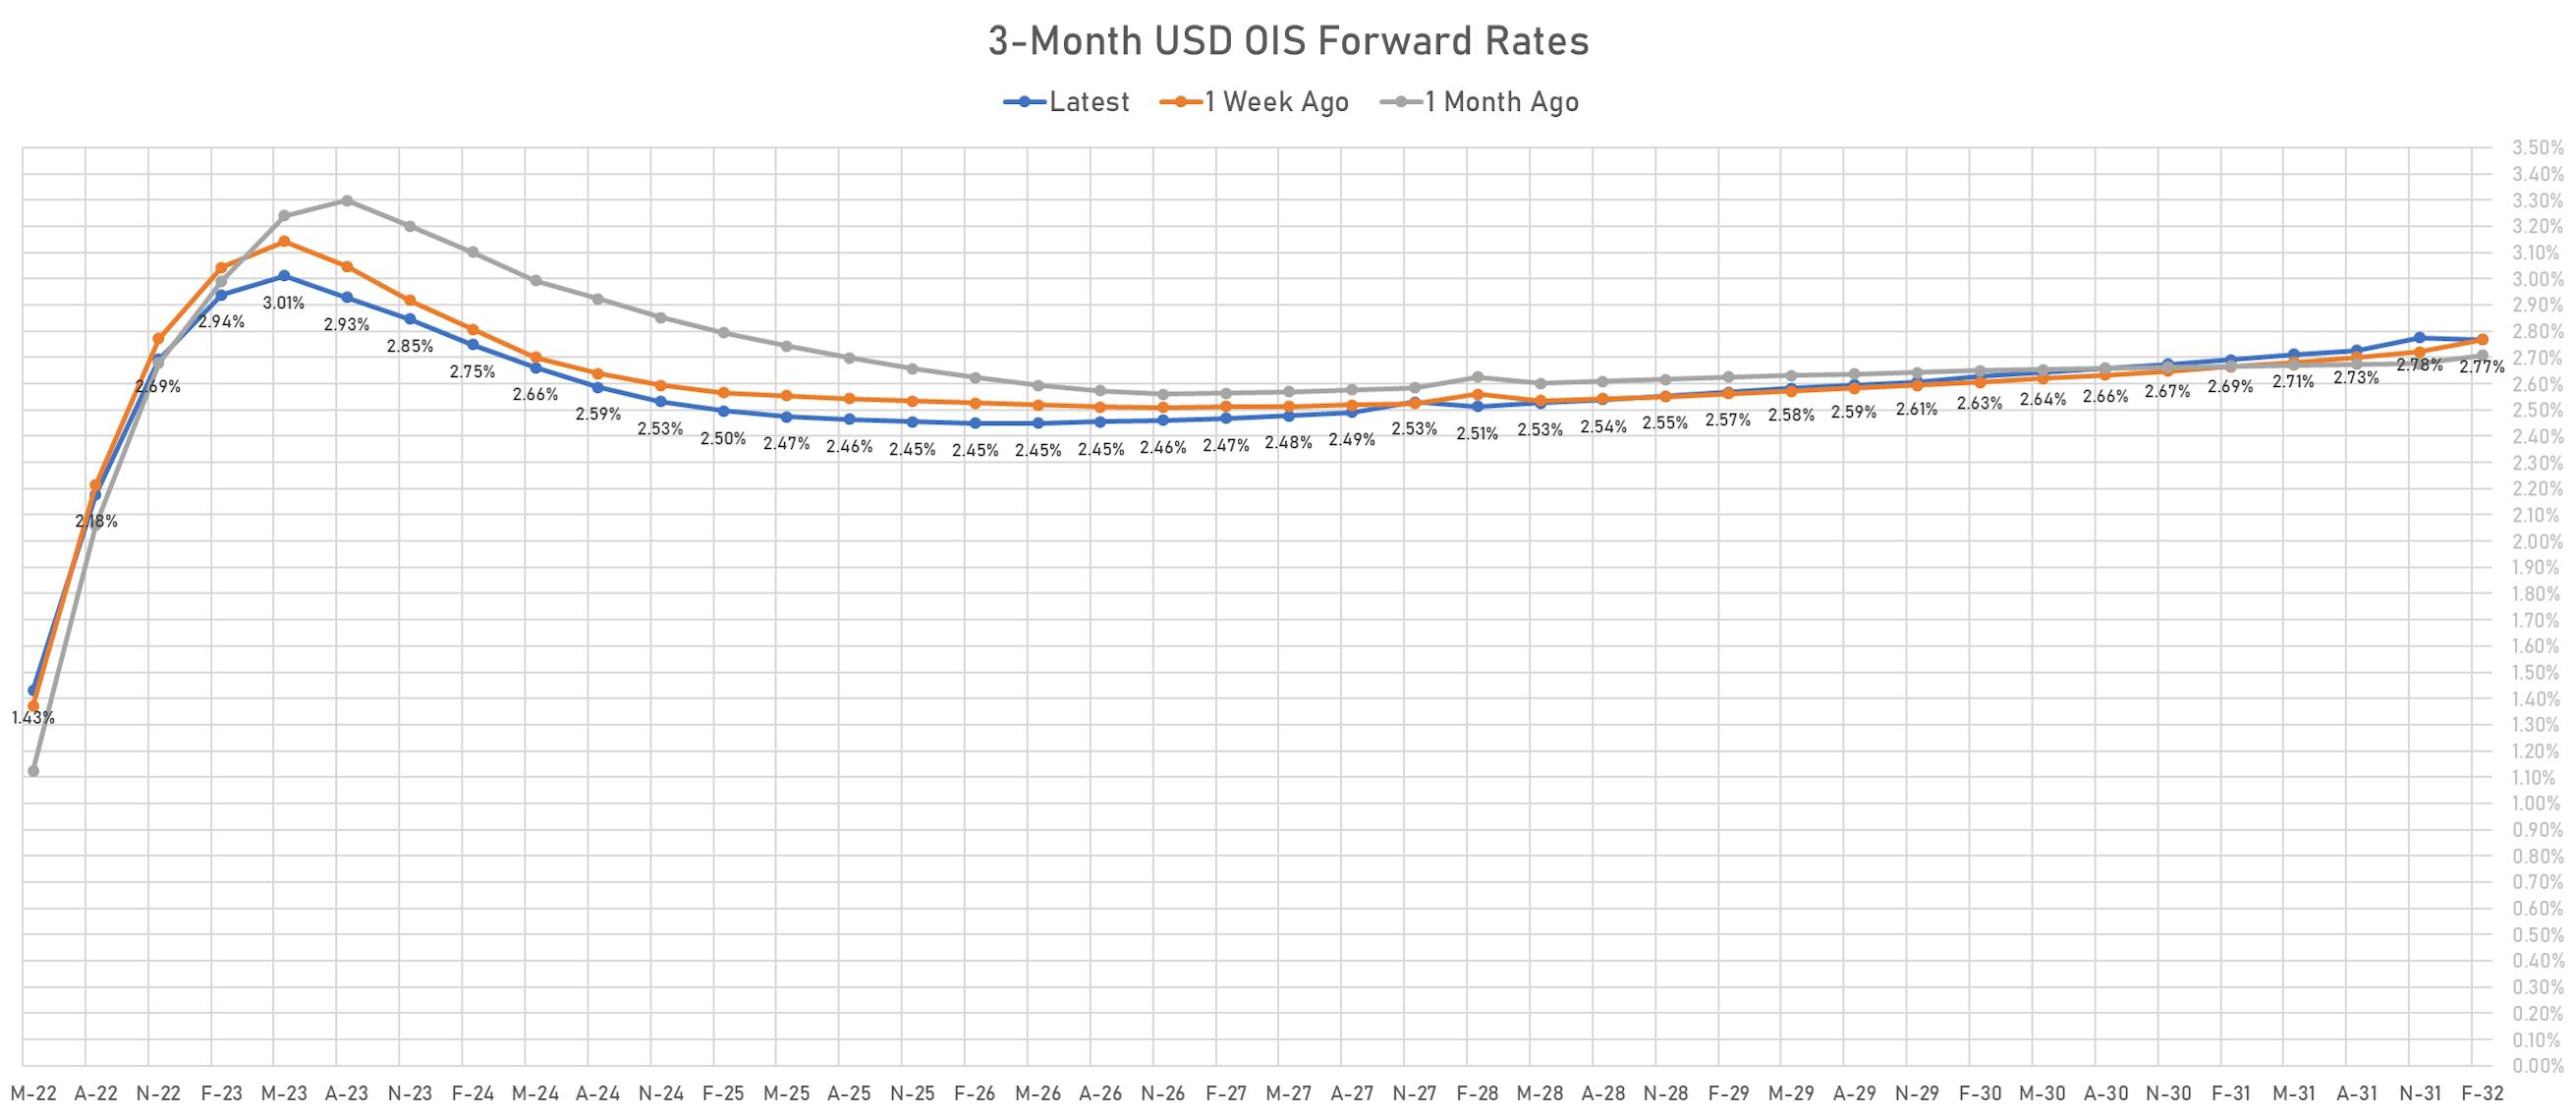 3M USD OIS Forward Curve | Sources: phipost.com, Refinitiv data 